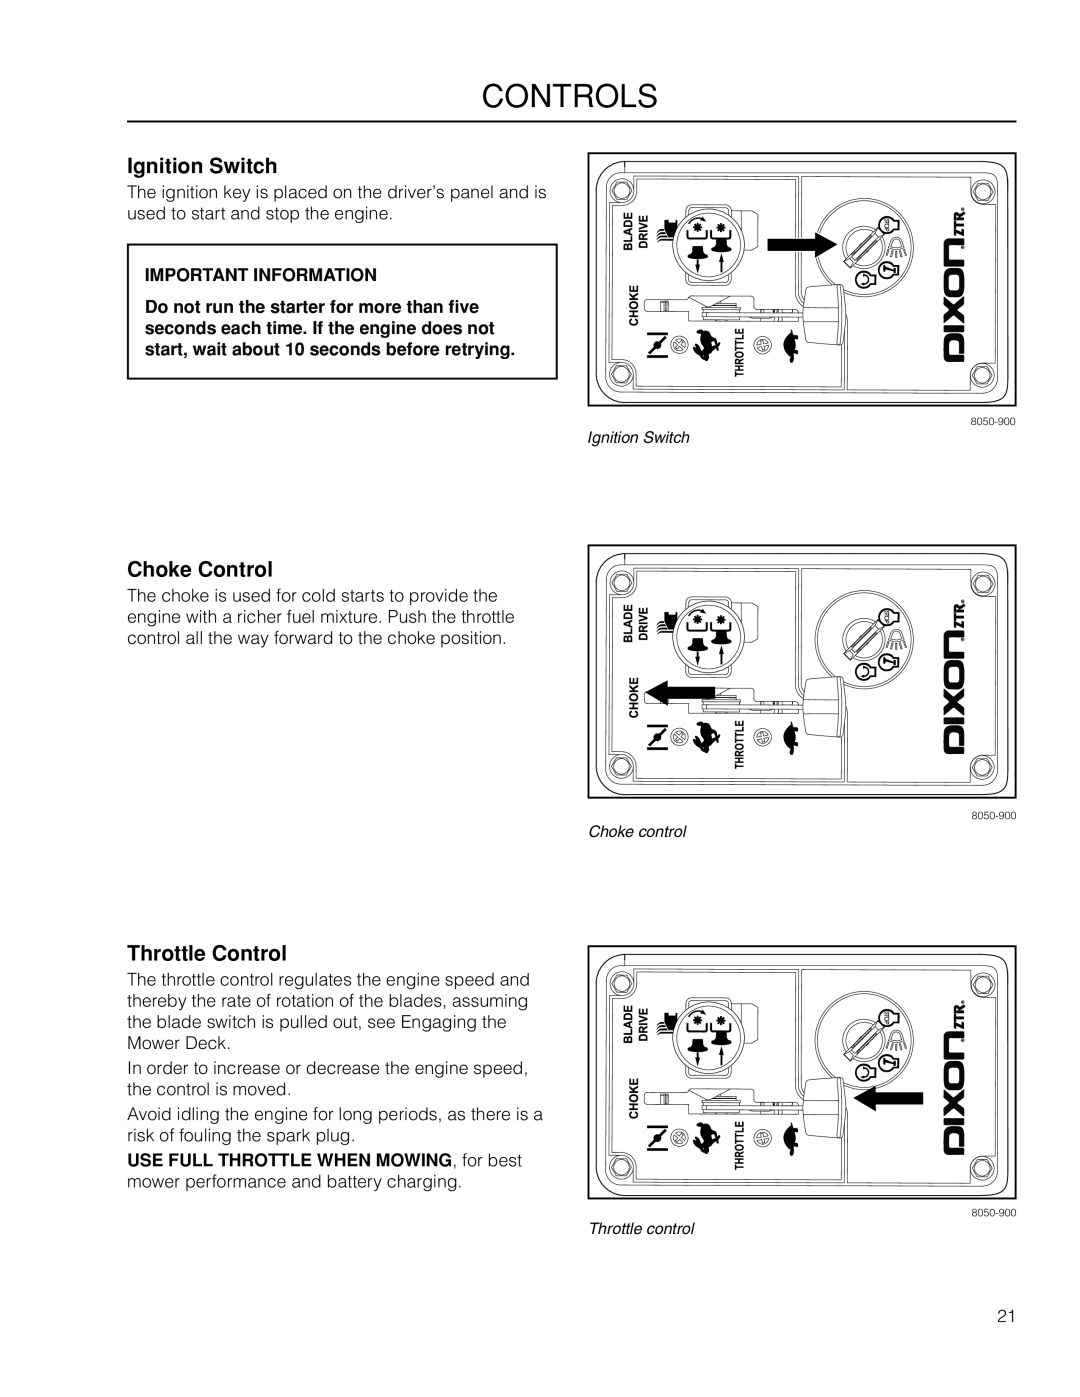 Dixon 966503601, SZ4619 CA manual Ignition Switch, Choke Control, Throttle Control, Controls, Important Information 